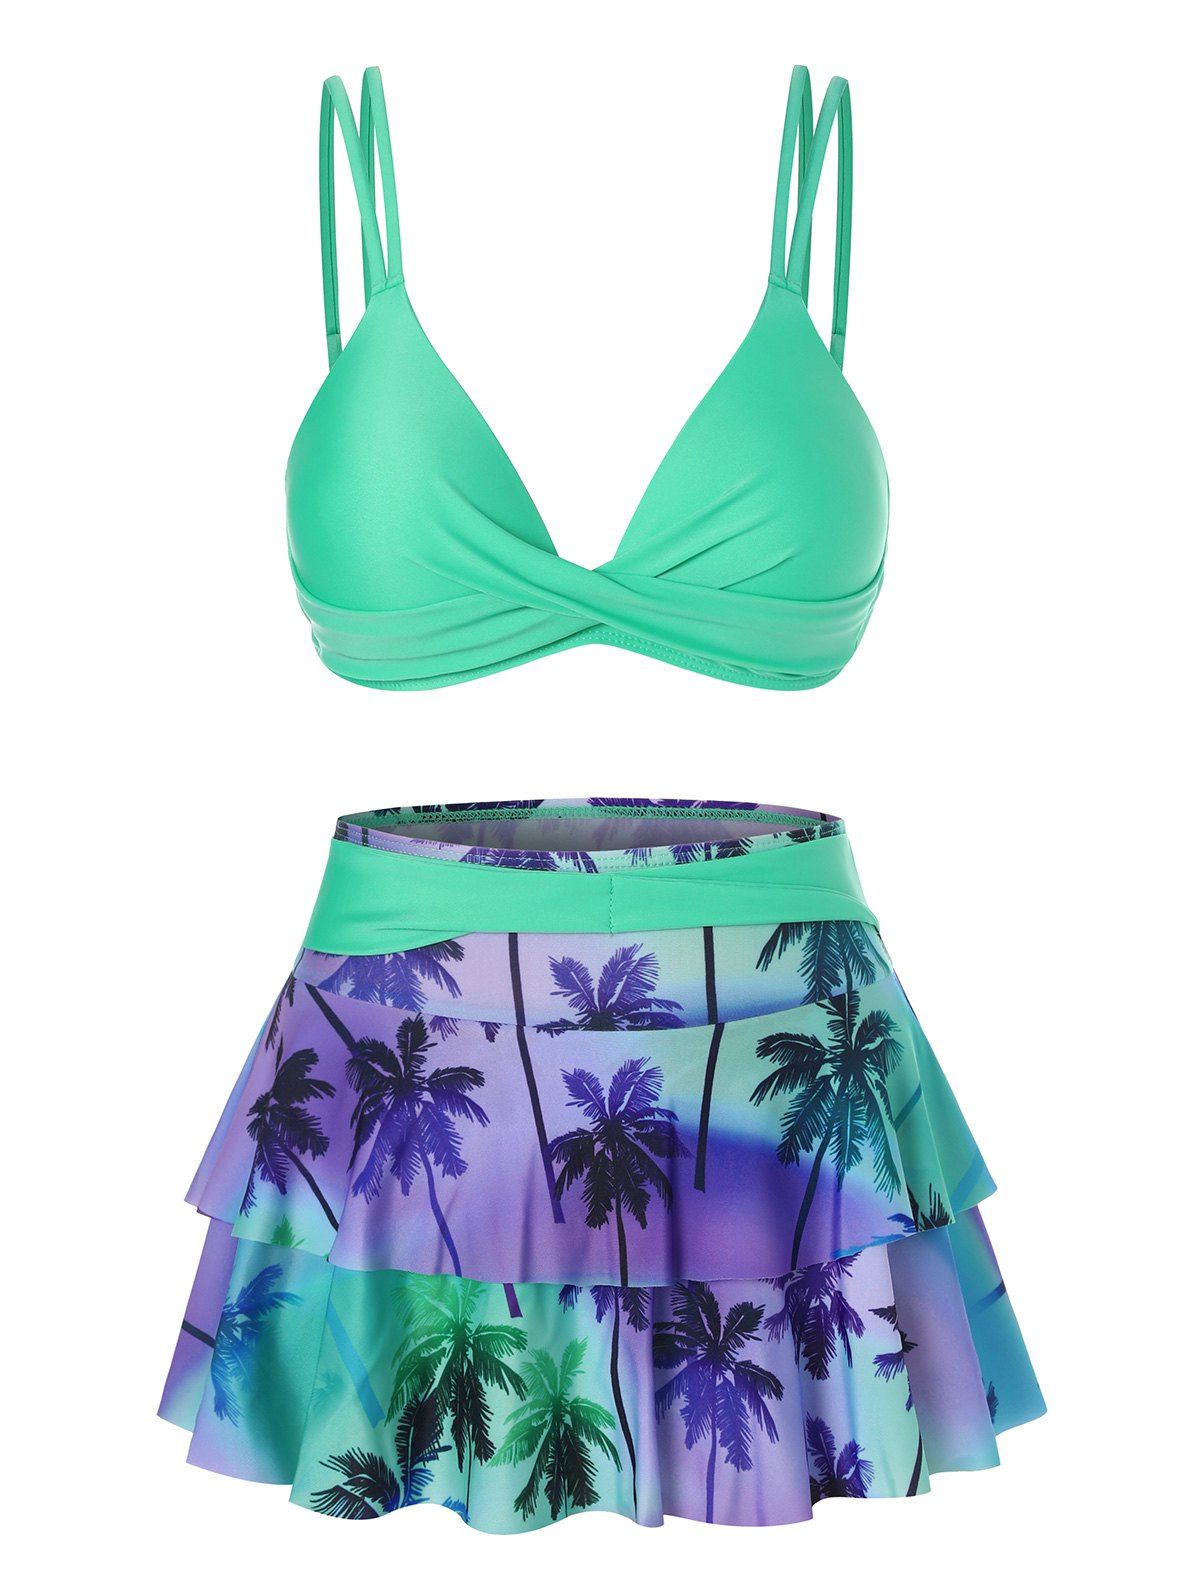 Beach Bikini Swimwear Tropical Palm Swimsuit Twisted Flounce Layered Skort Summer Bathing Suit - GREEN M